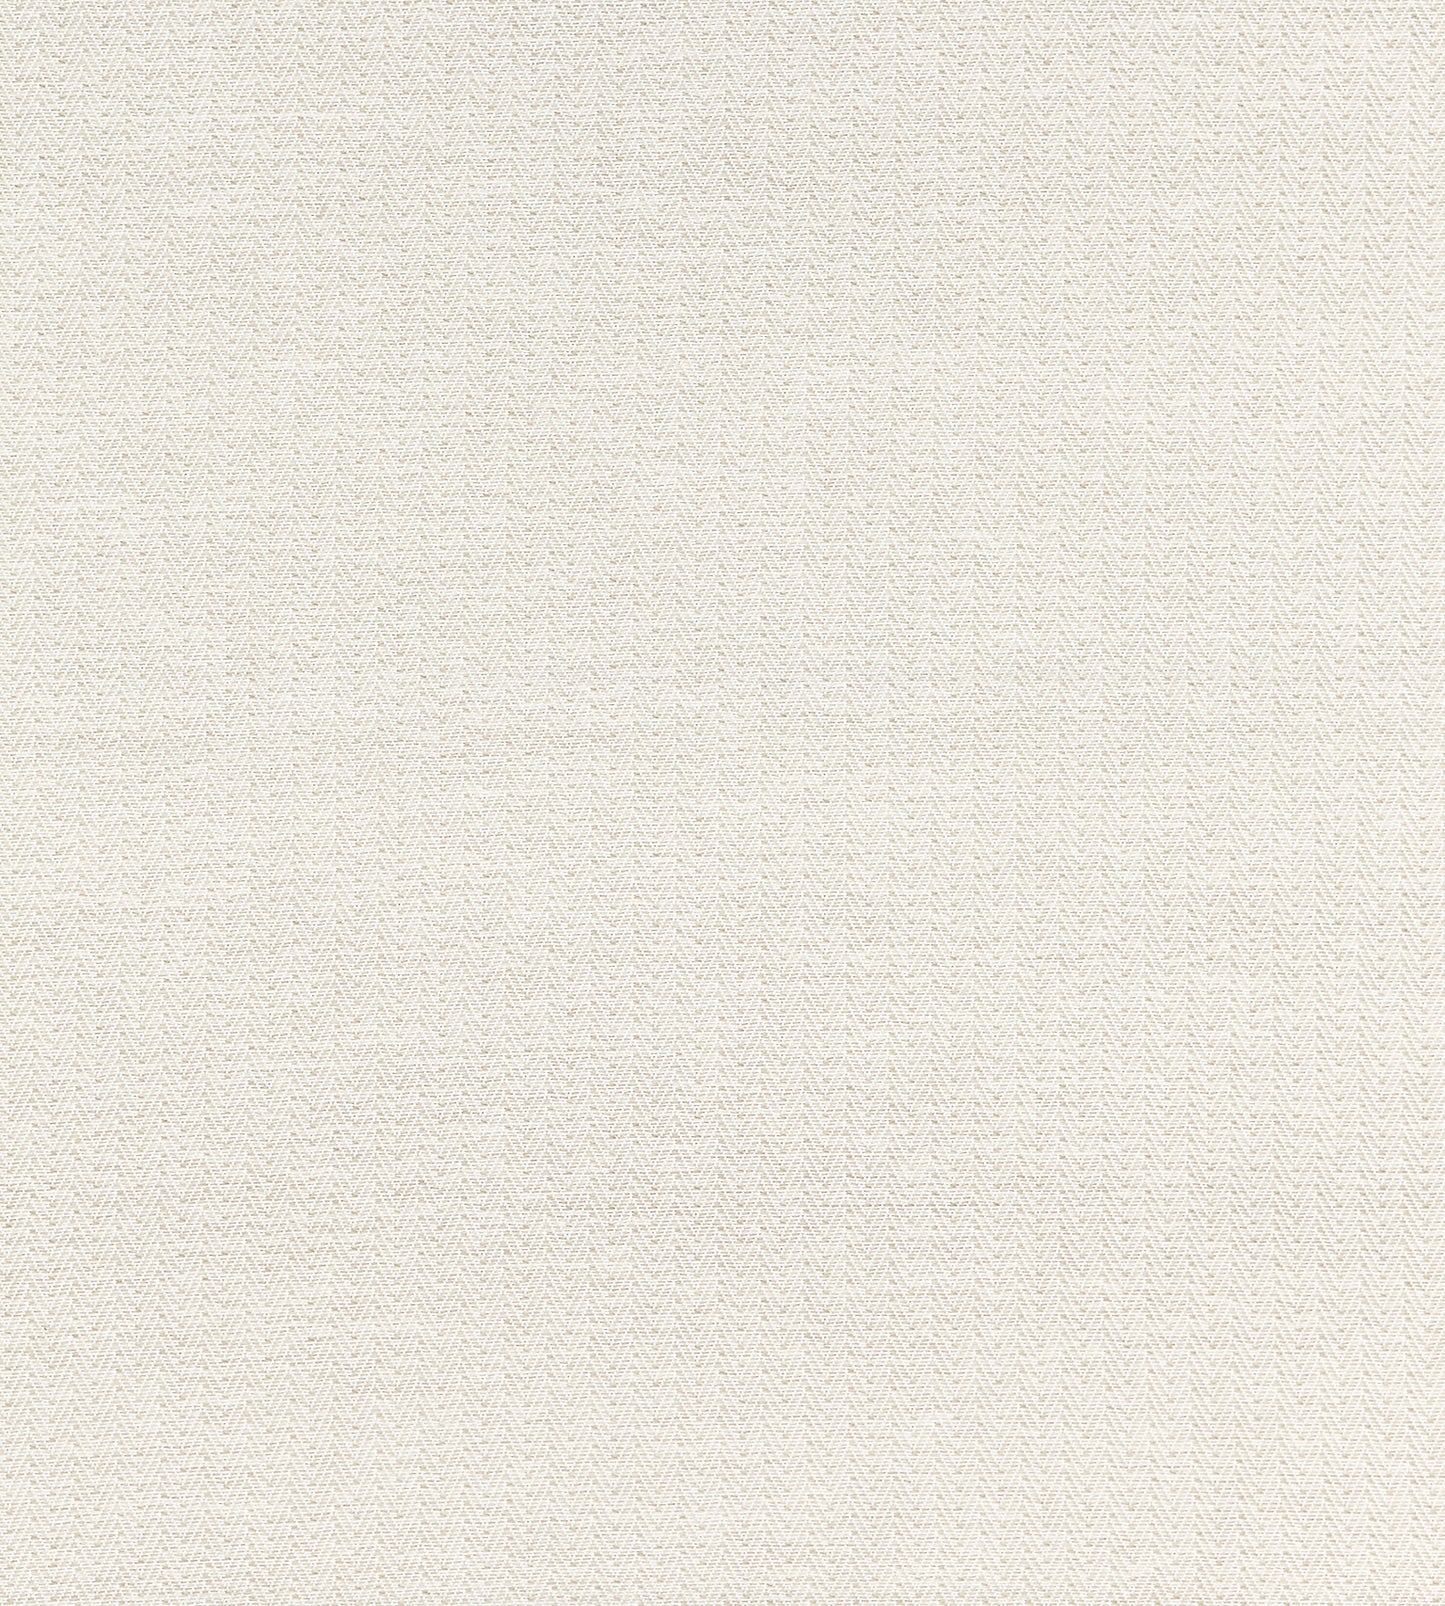 Purchase Scalamandre Fabric Pattern SC 000127191, Capri Herringbone Linen 1